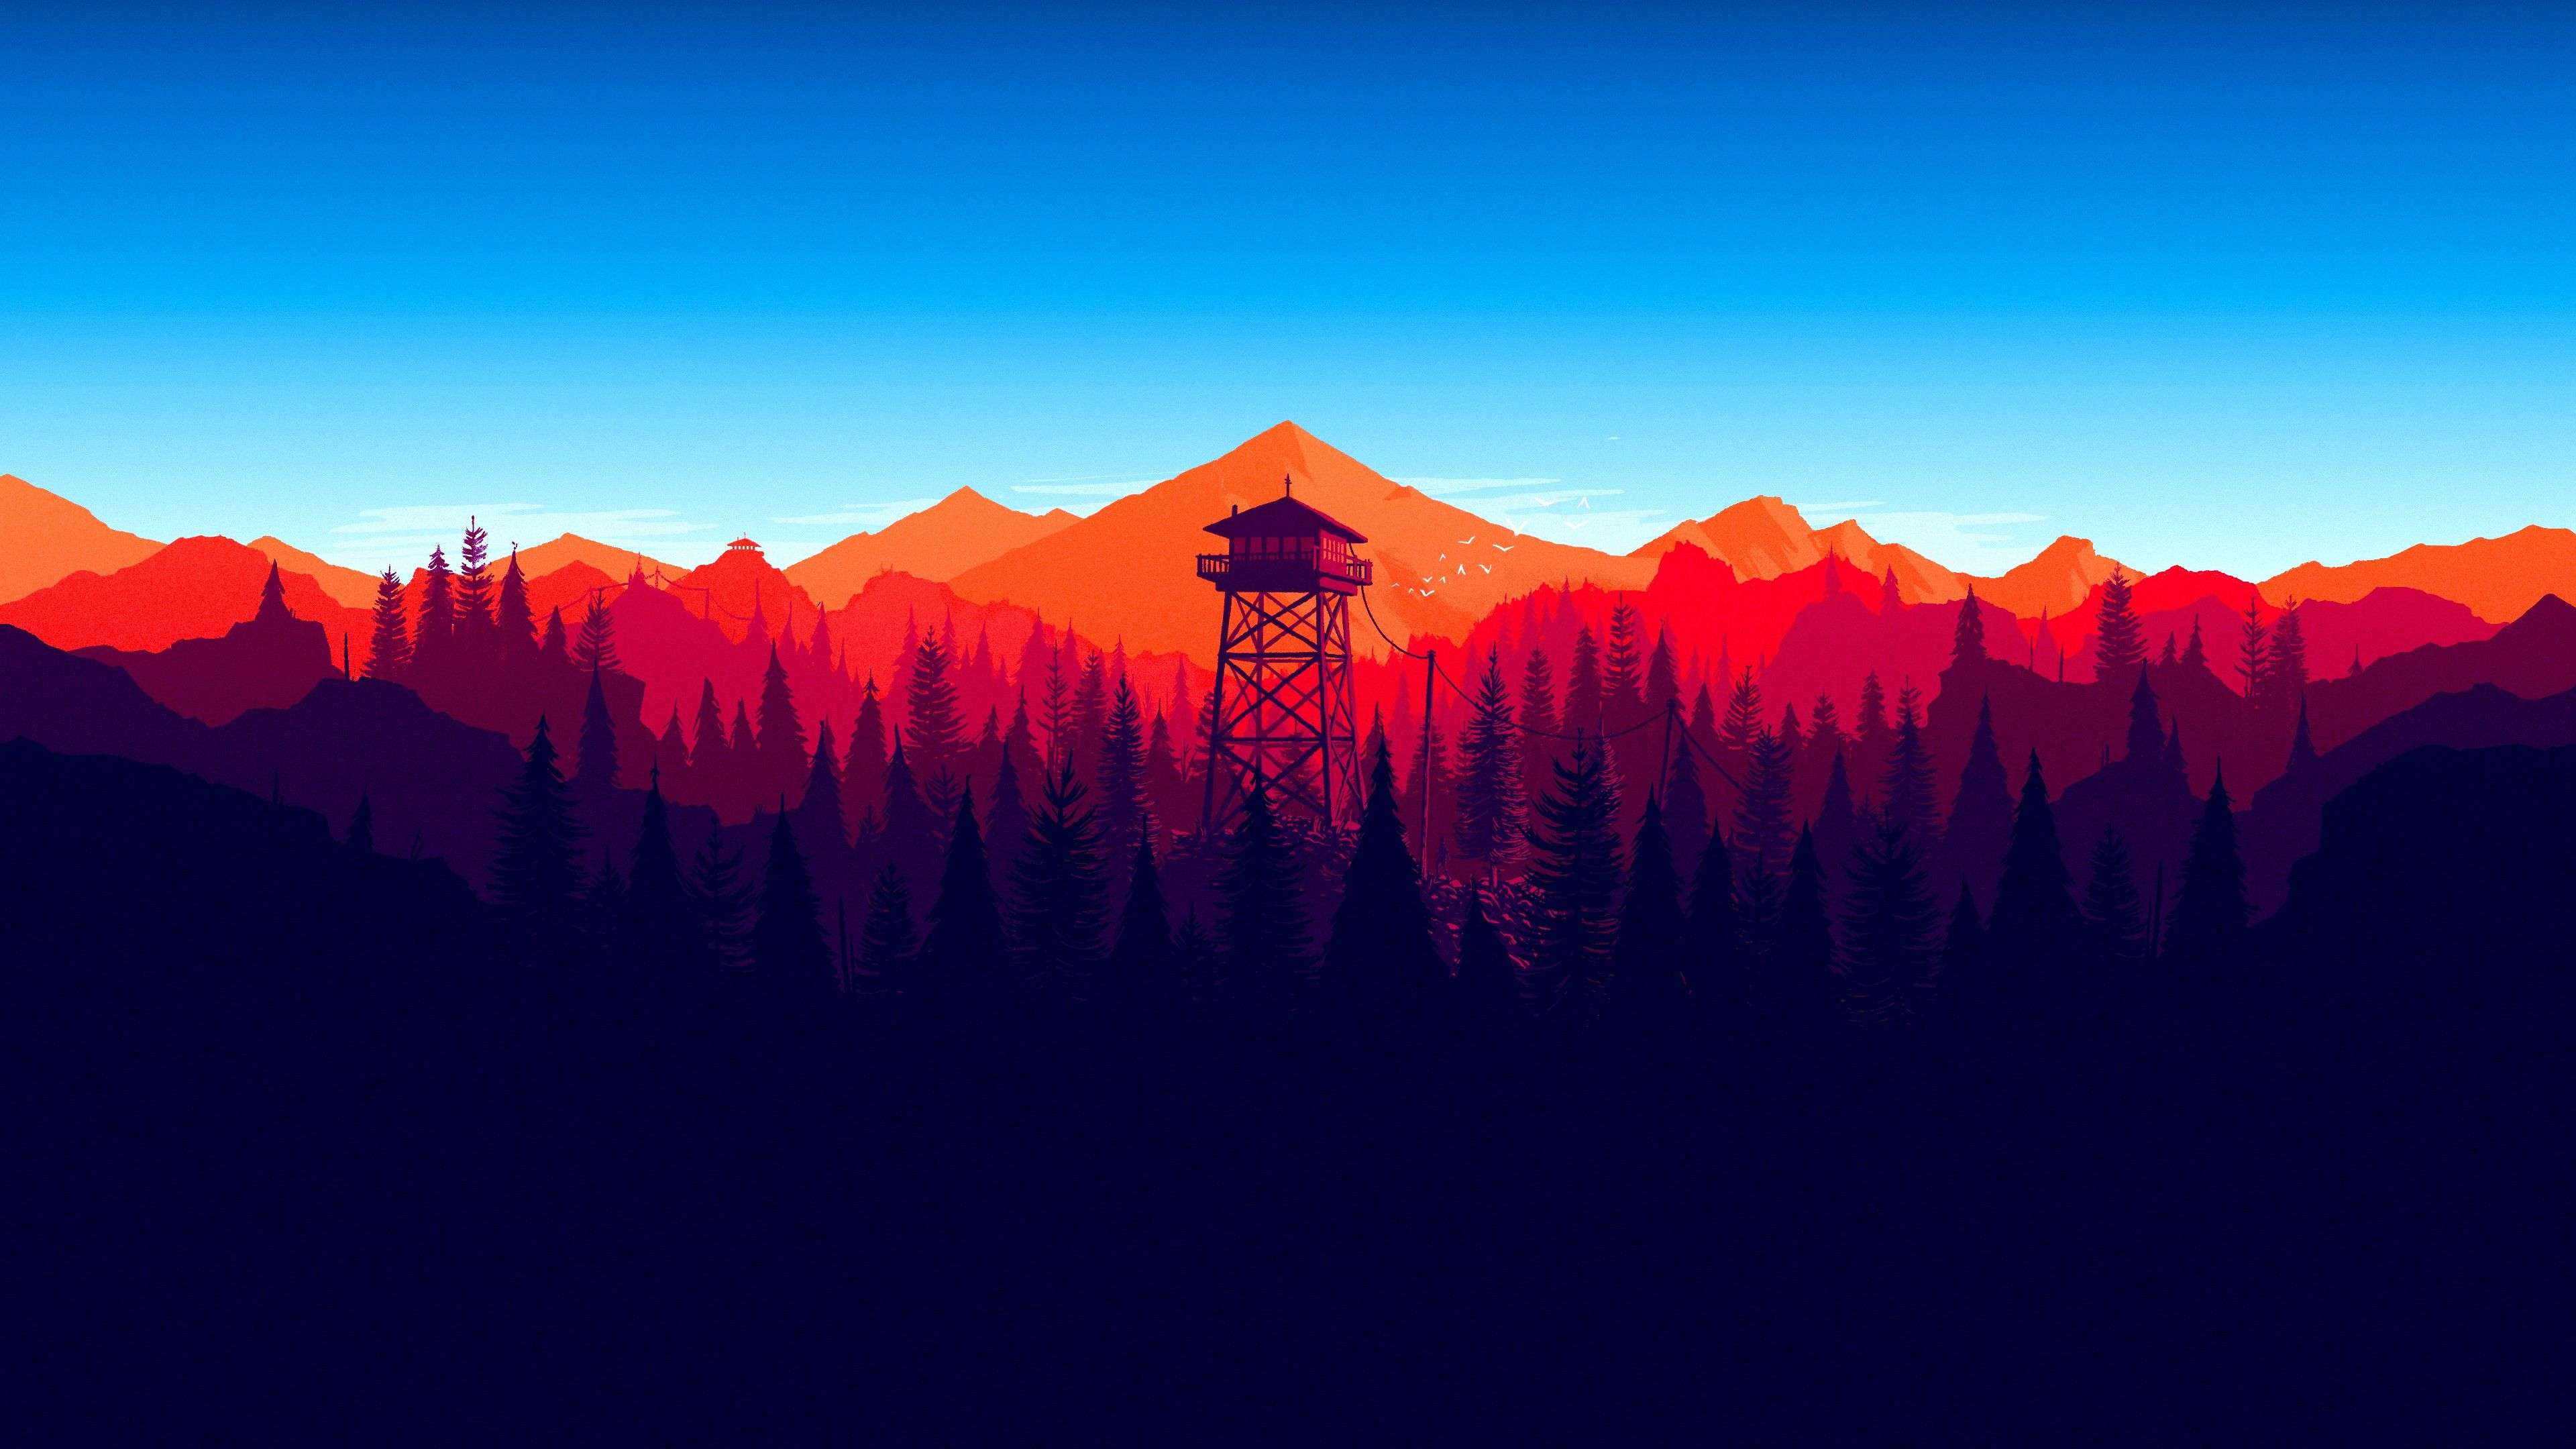 Minimalist Desktop Wallpaper Mountains